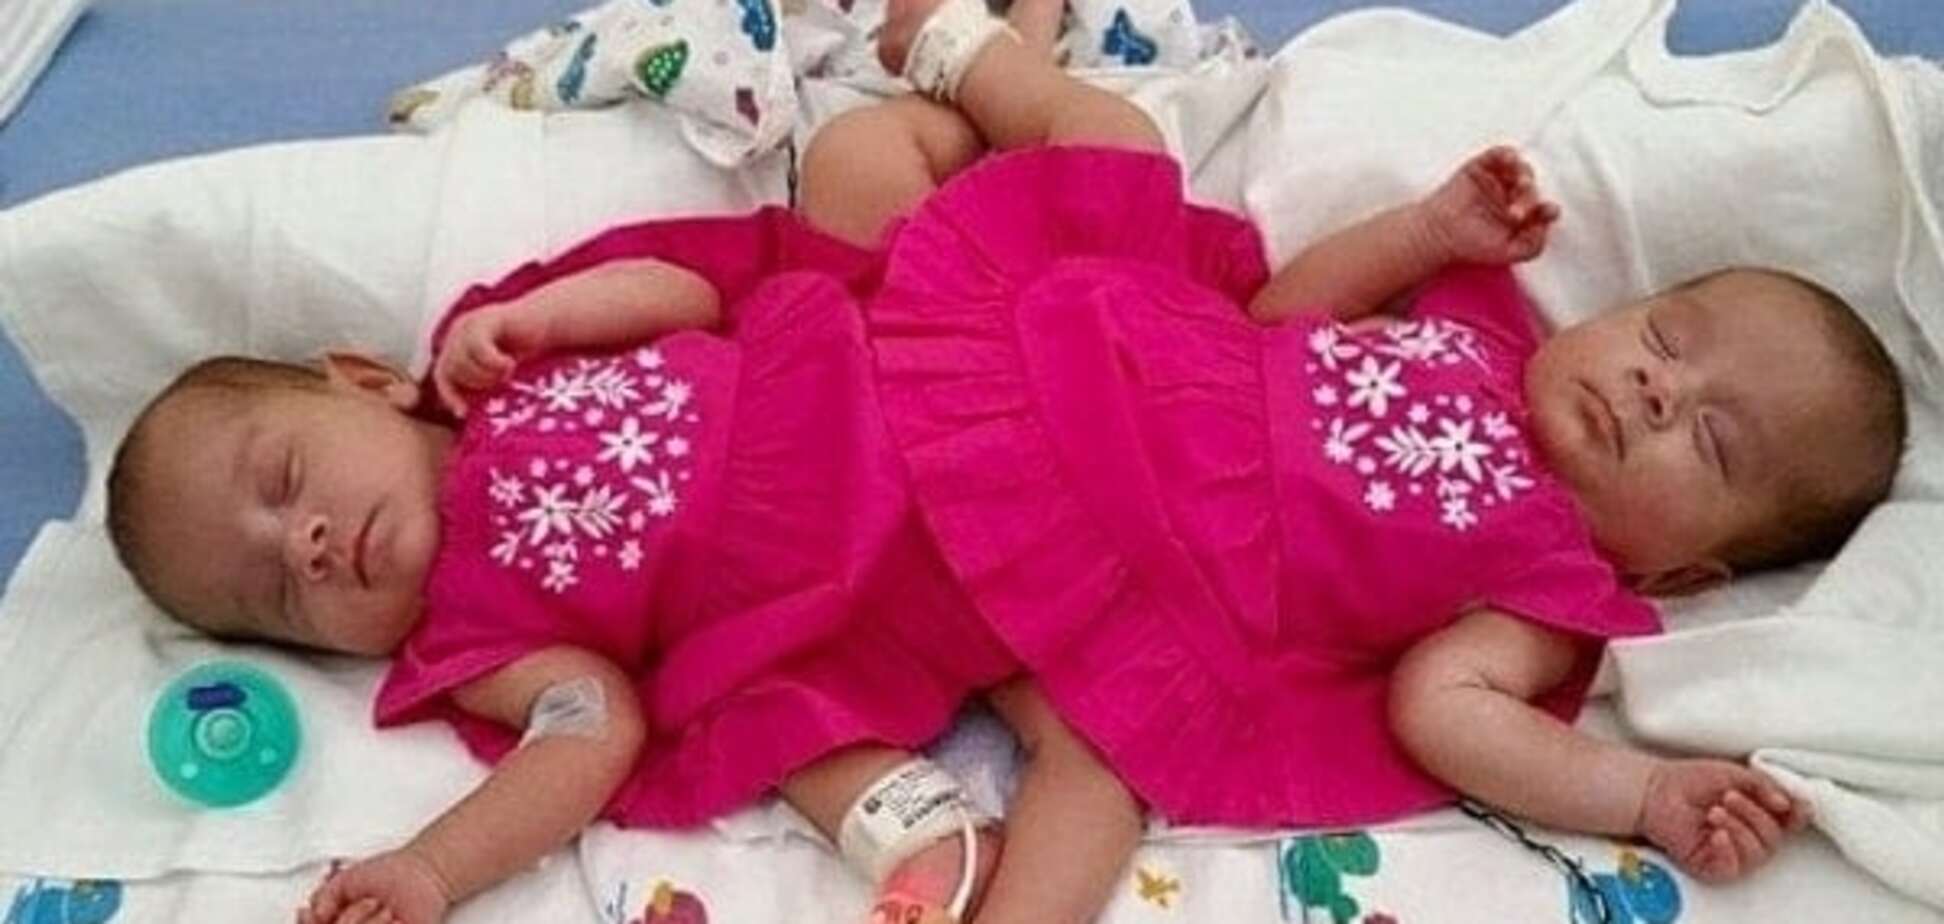 В США разделили сиамских близнецов, сросшихся в области таза  (фото, видео)